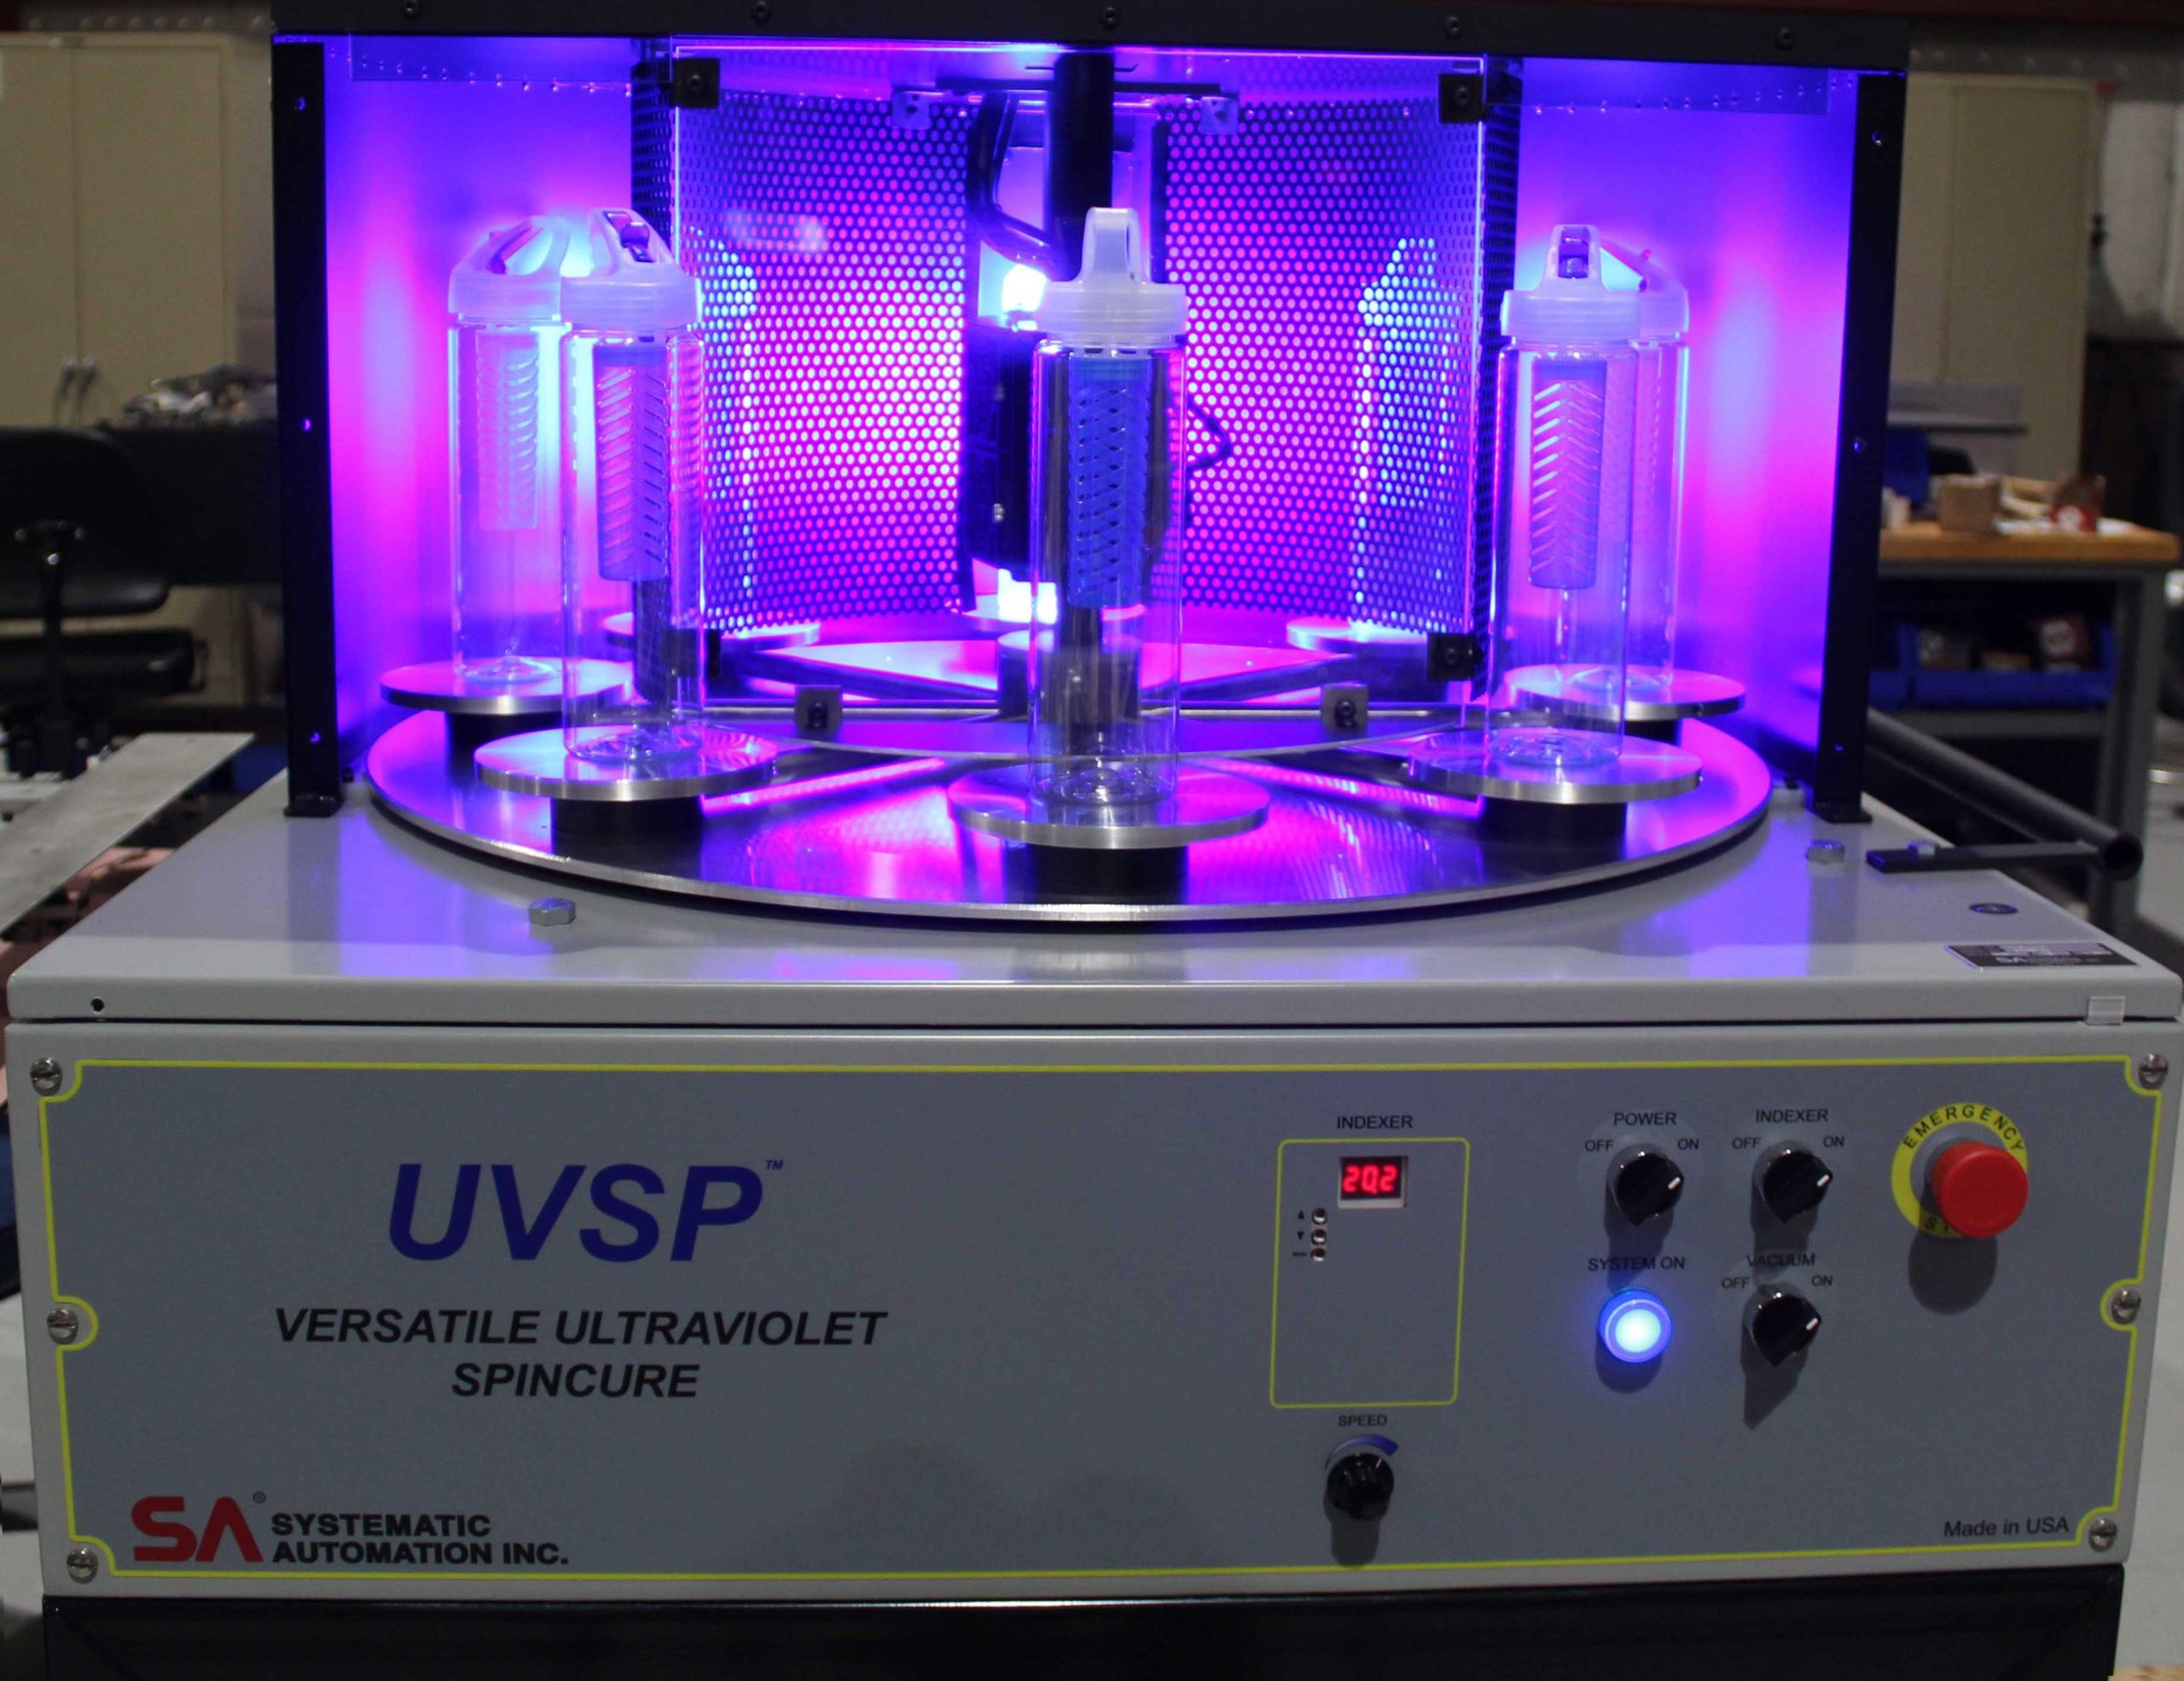 UV led, phoseon, systematic automation, uvsp led